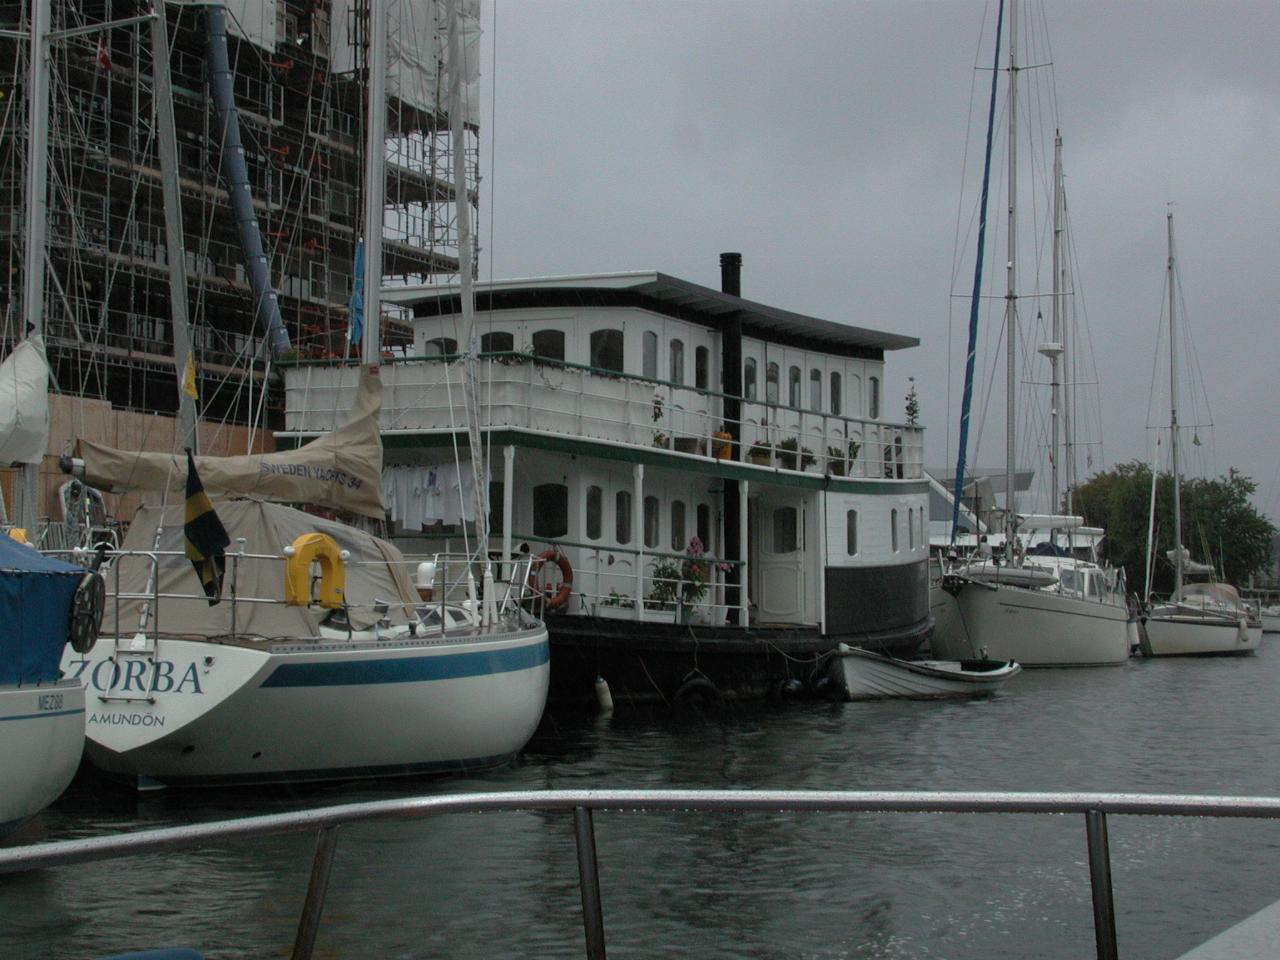 KPLU Viking Jazz: House boat on Christianhaven Canal